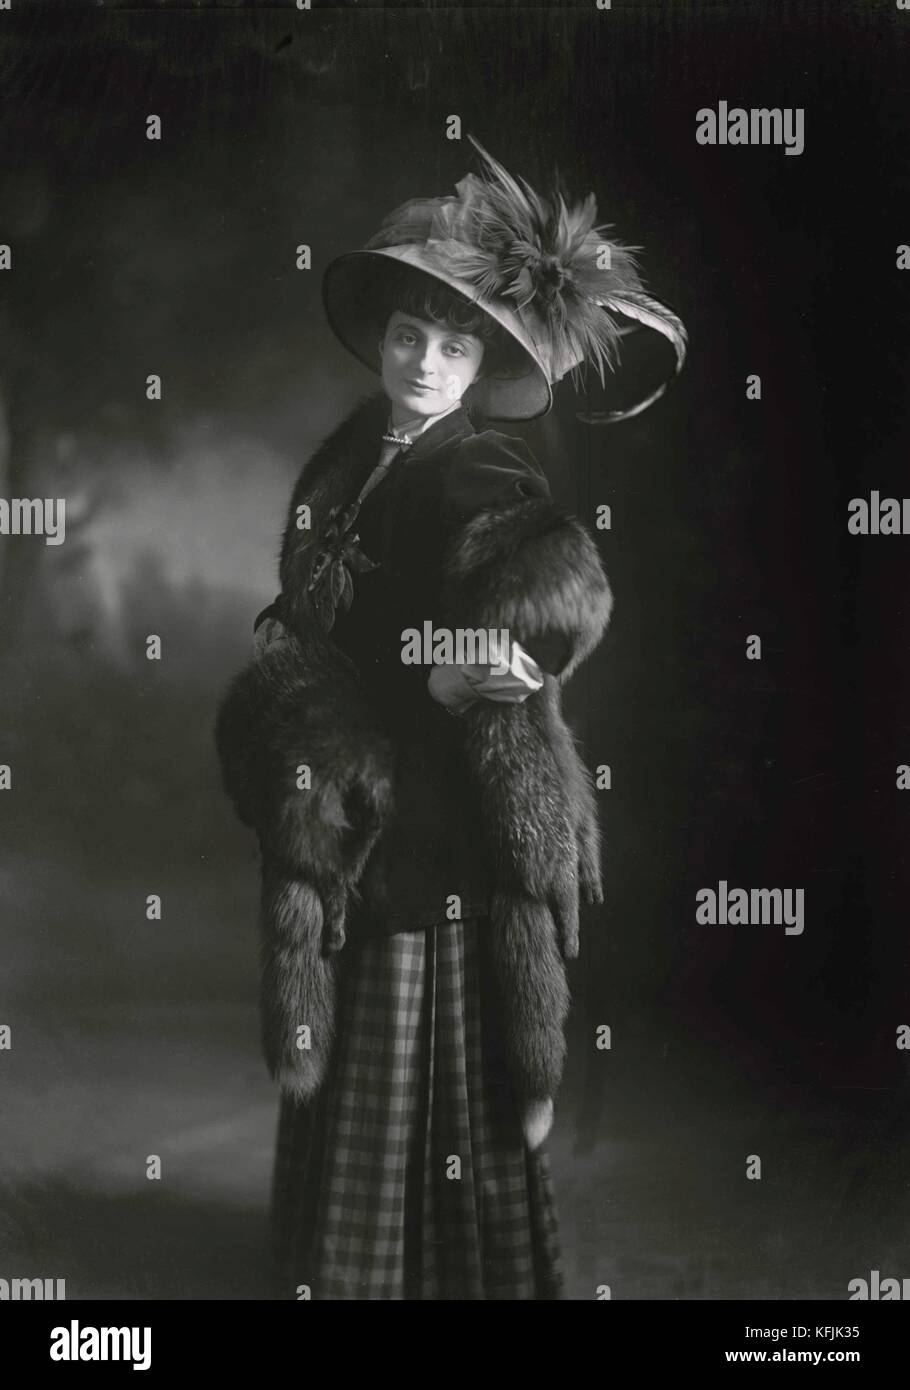 Anna de Noailles, Comtesse Mathieu de Noailles (1876-1933), französische Schriftstellerin. C. 1920 Photo Taponier Photo12.com - Coll-Taponier Credit:Photo12/Coll. Taponier Stockfoto